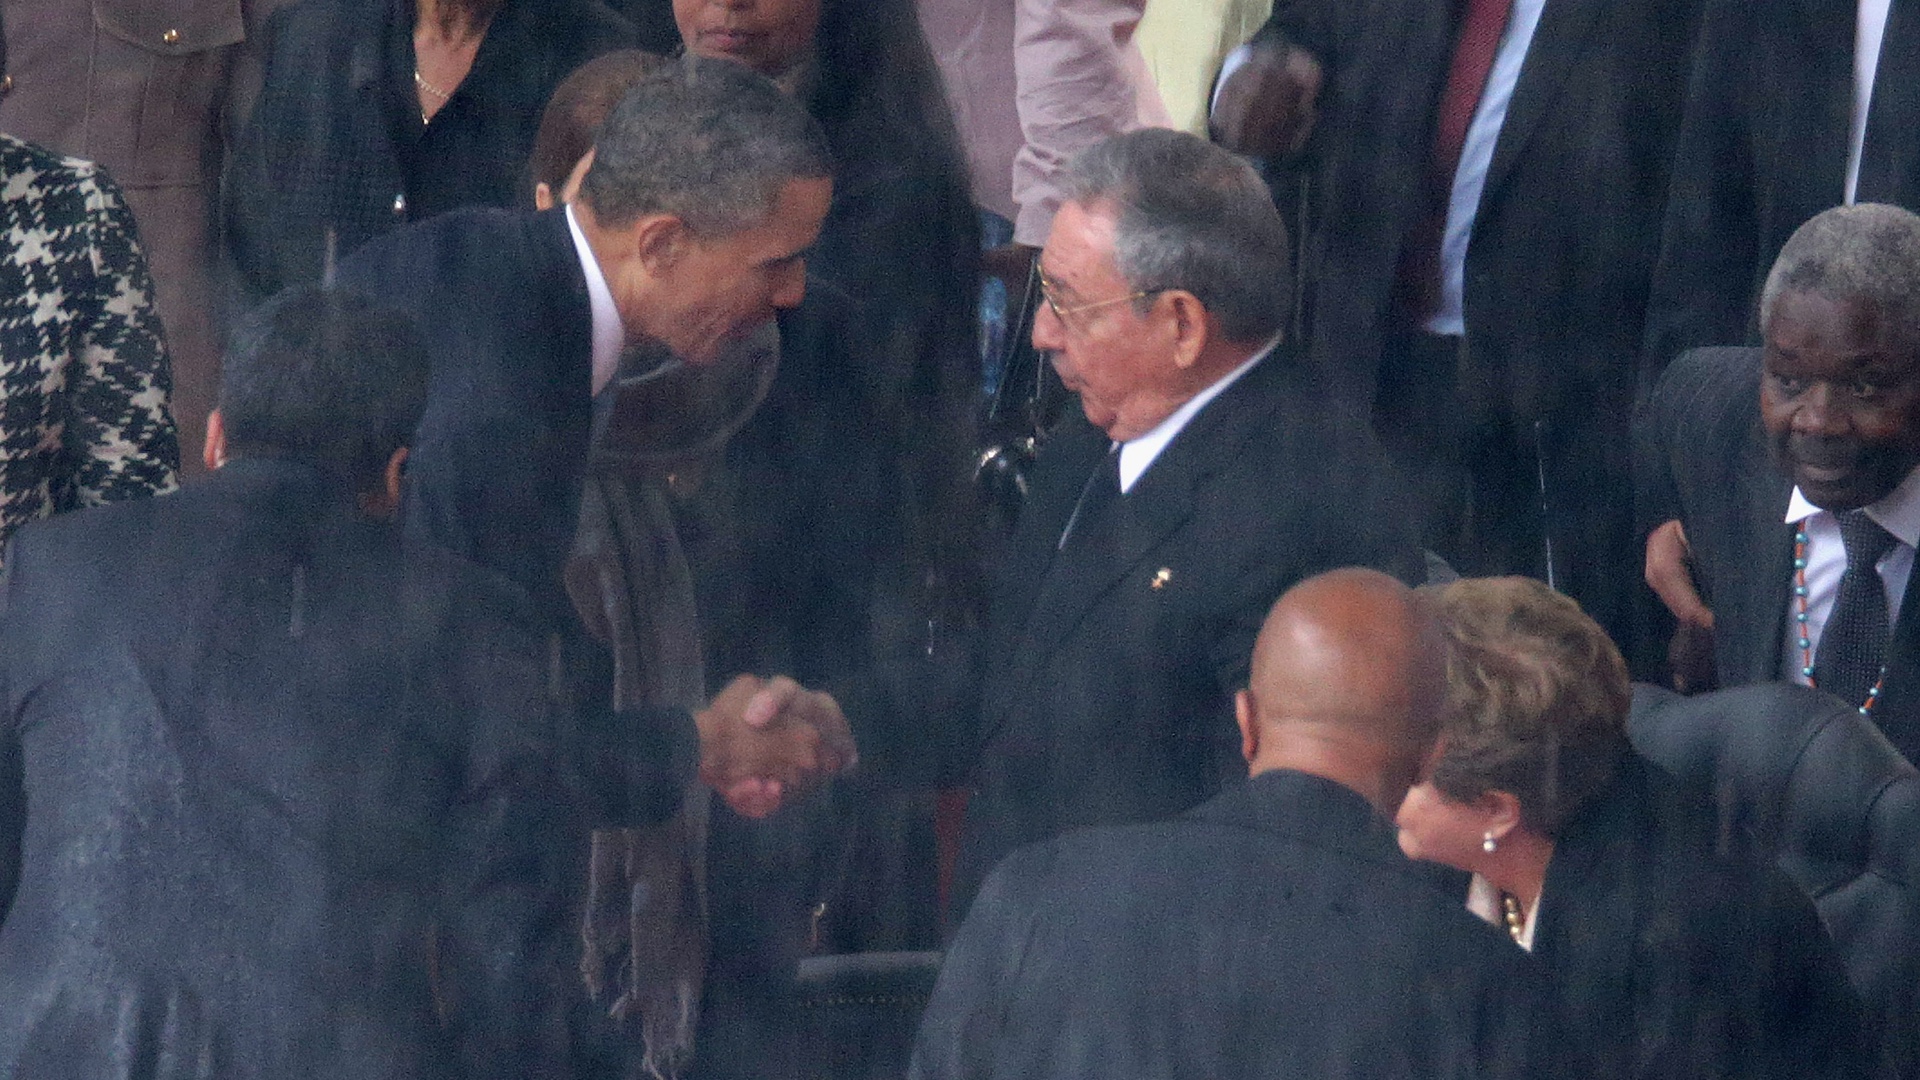 Obama meets Castro